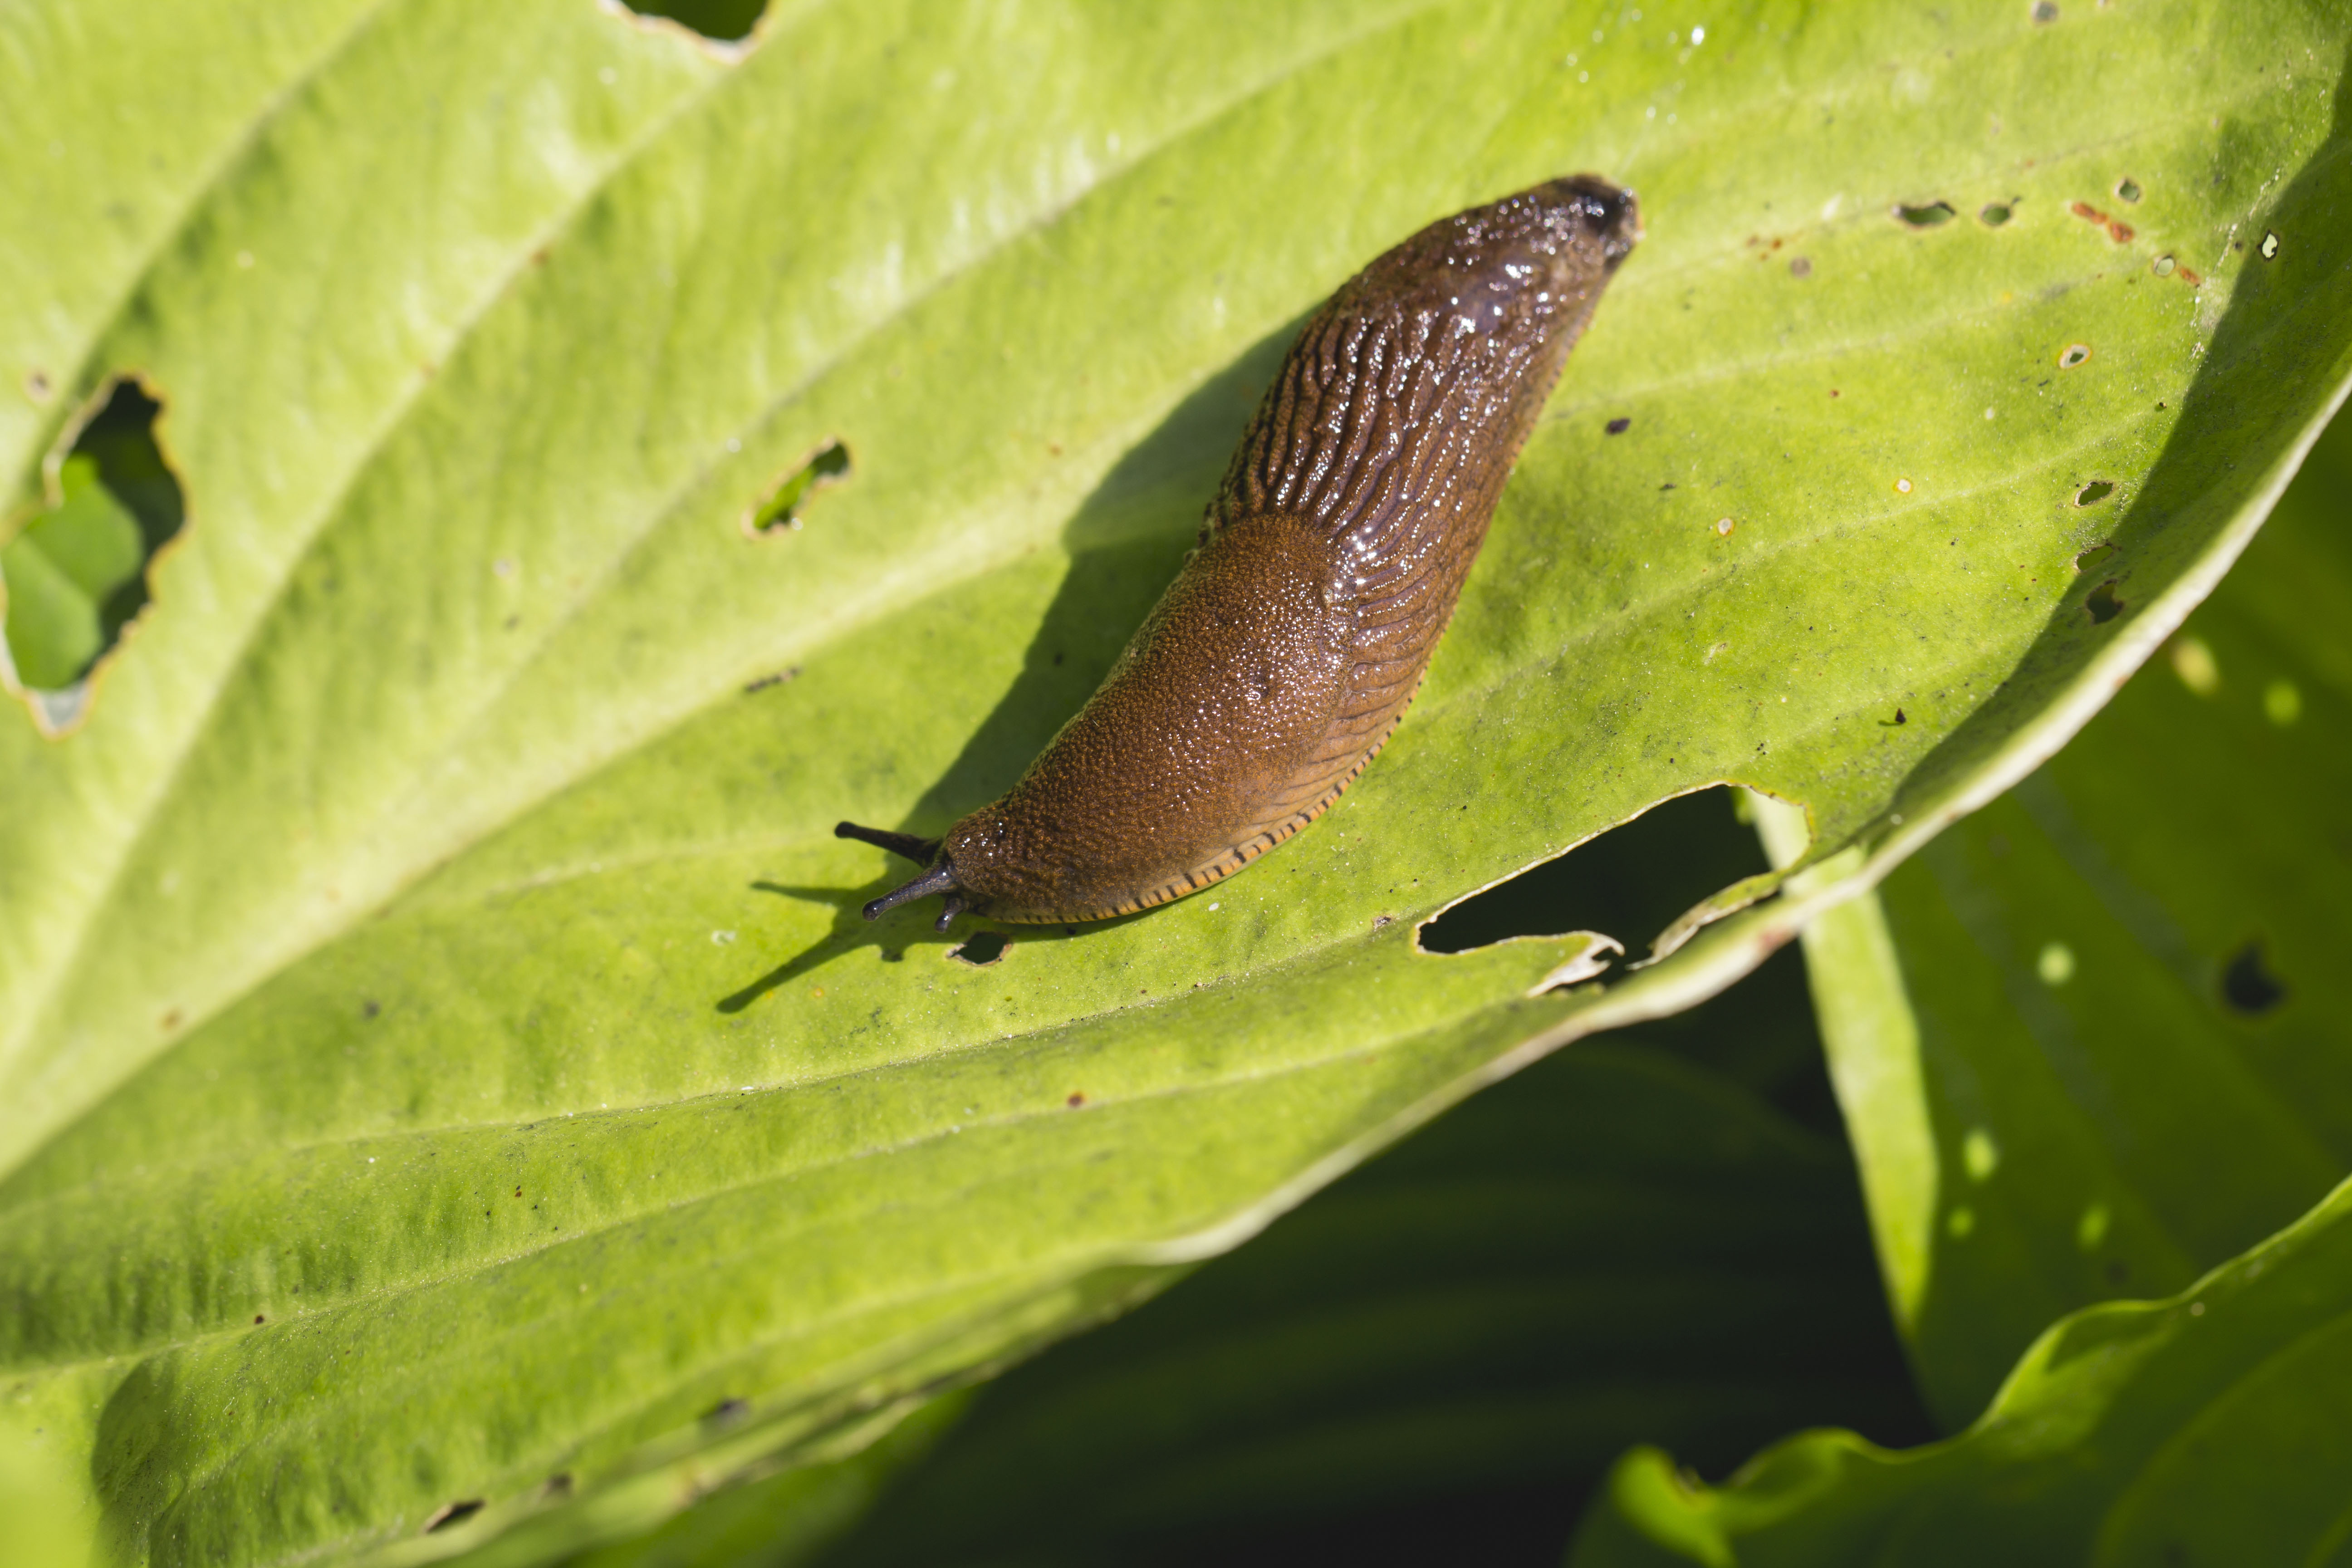 A closeup of a slug on a hosta leaf that shows damage from a previous slug attack.